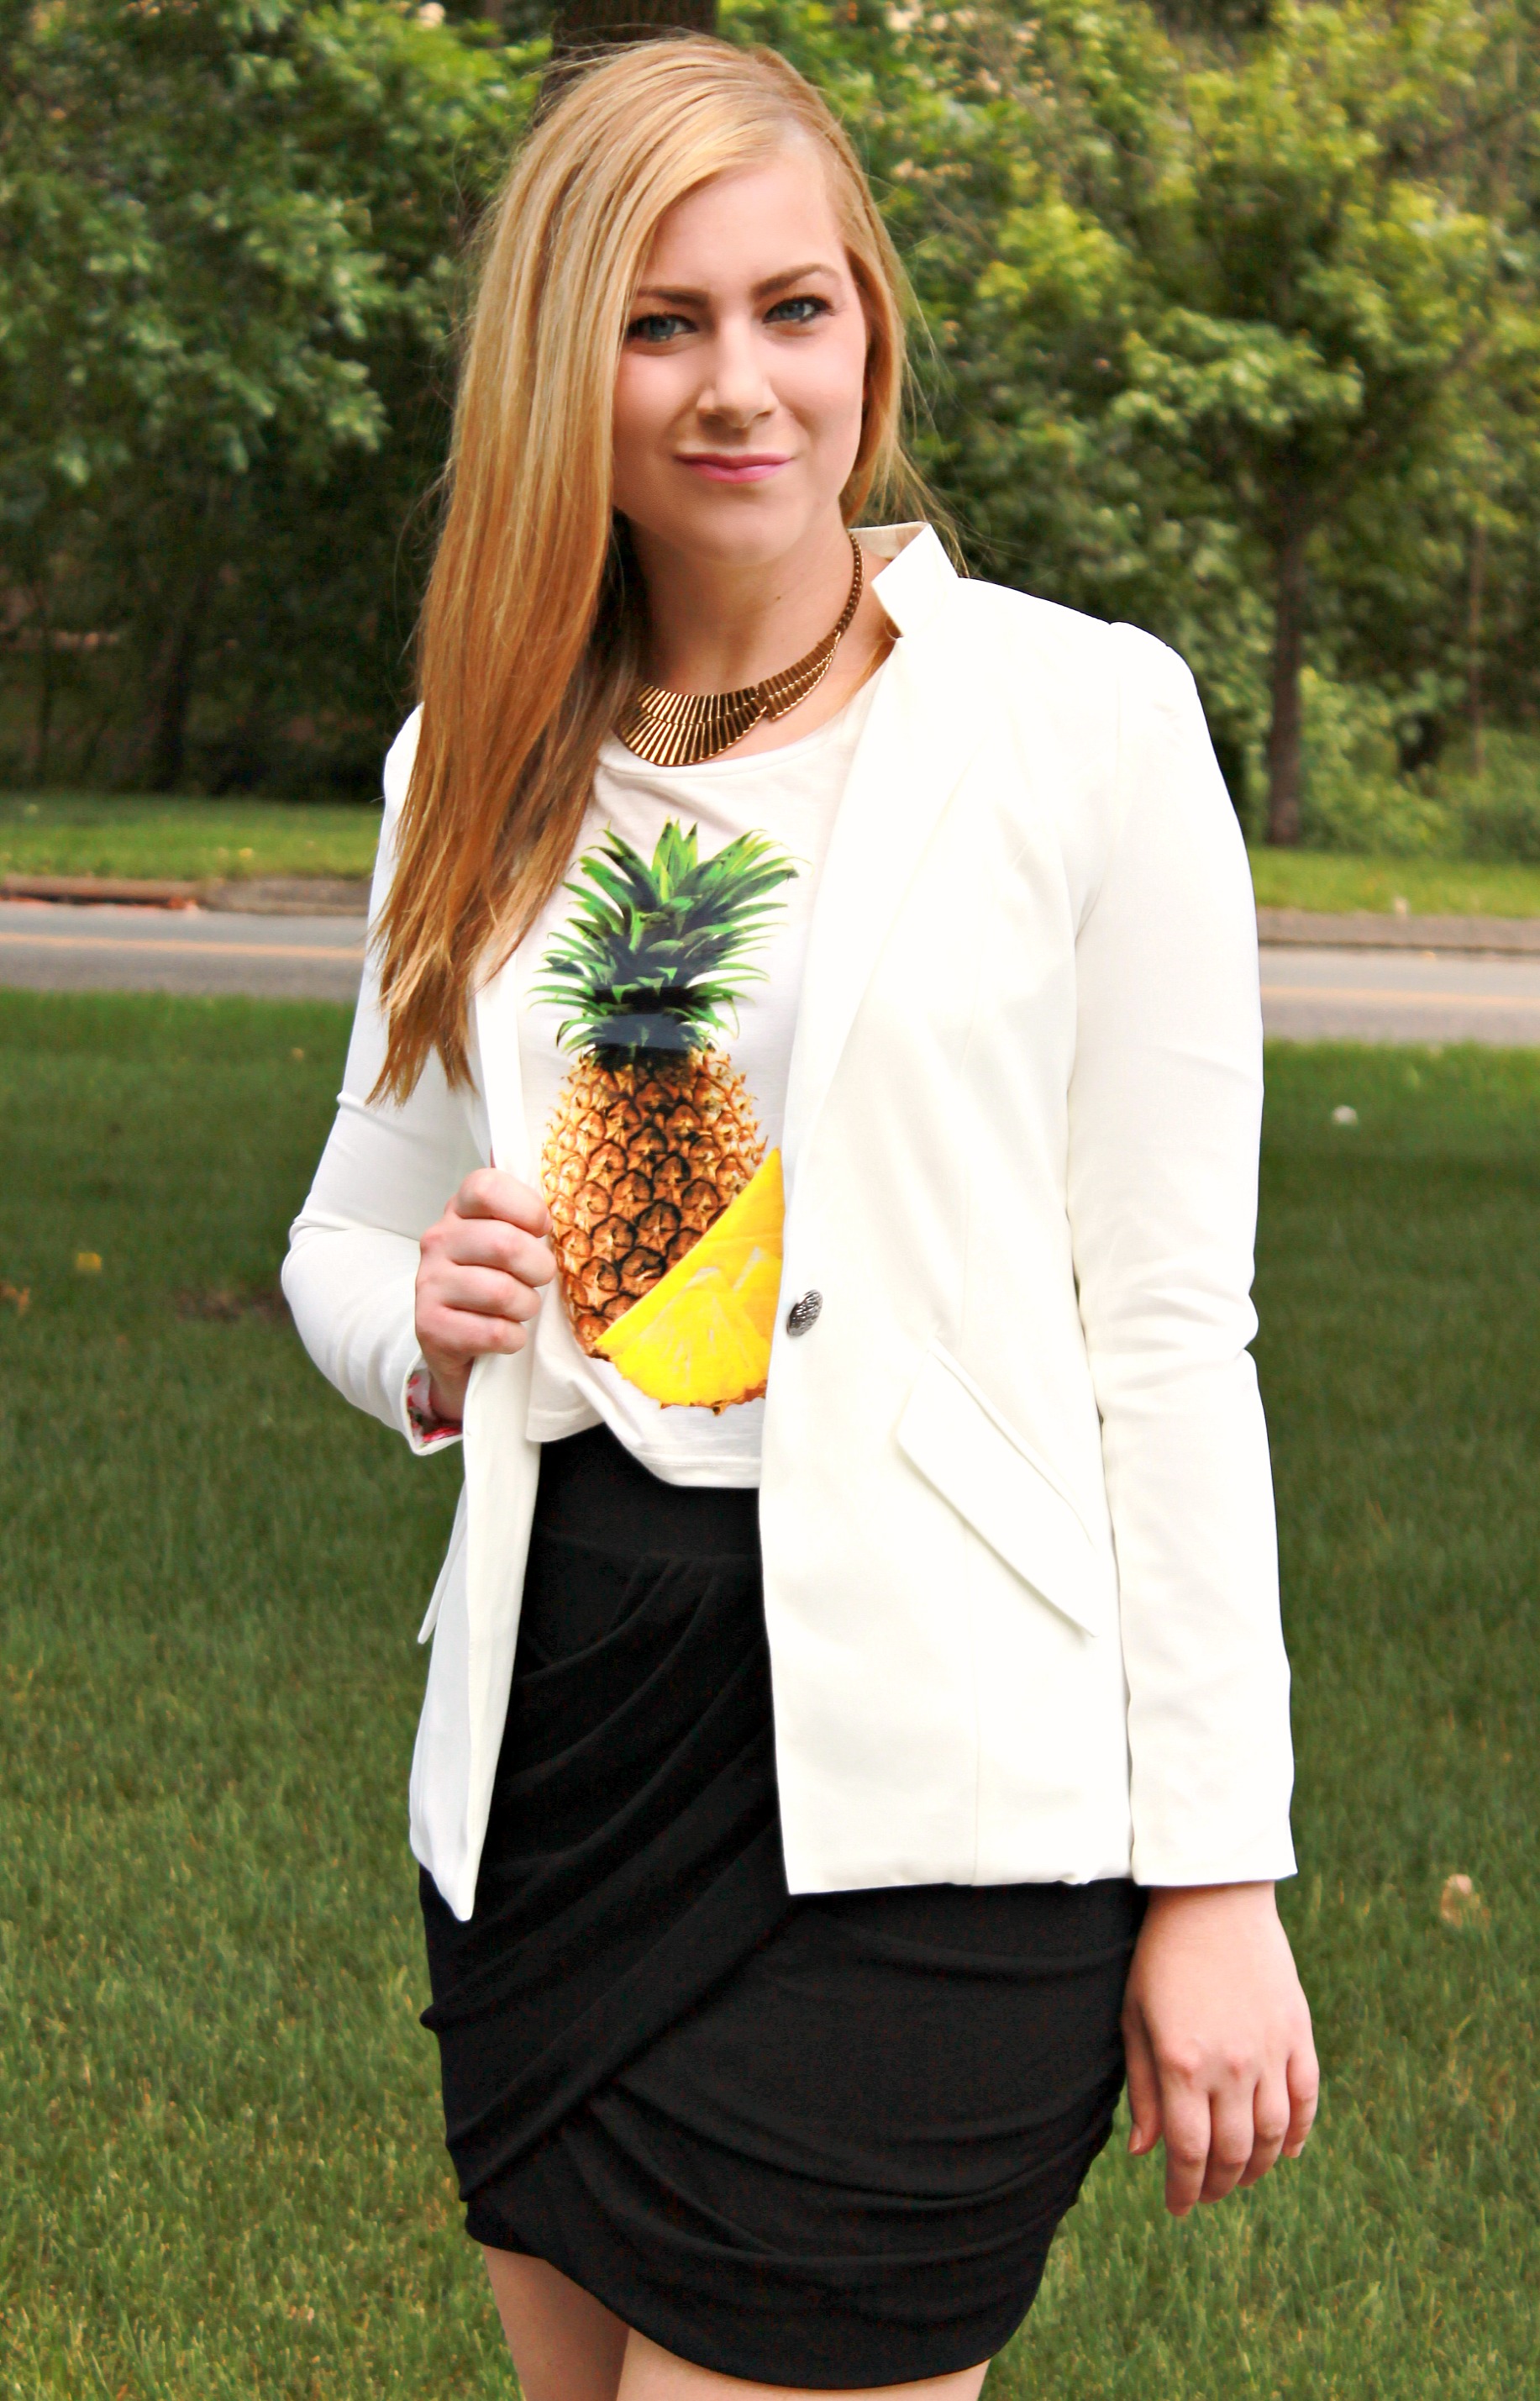 pineapple t shirt